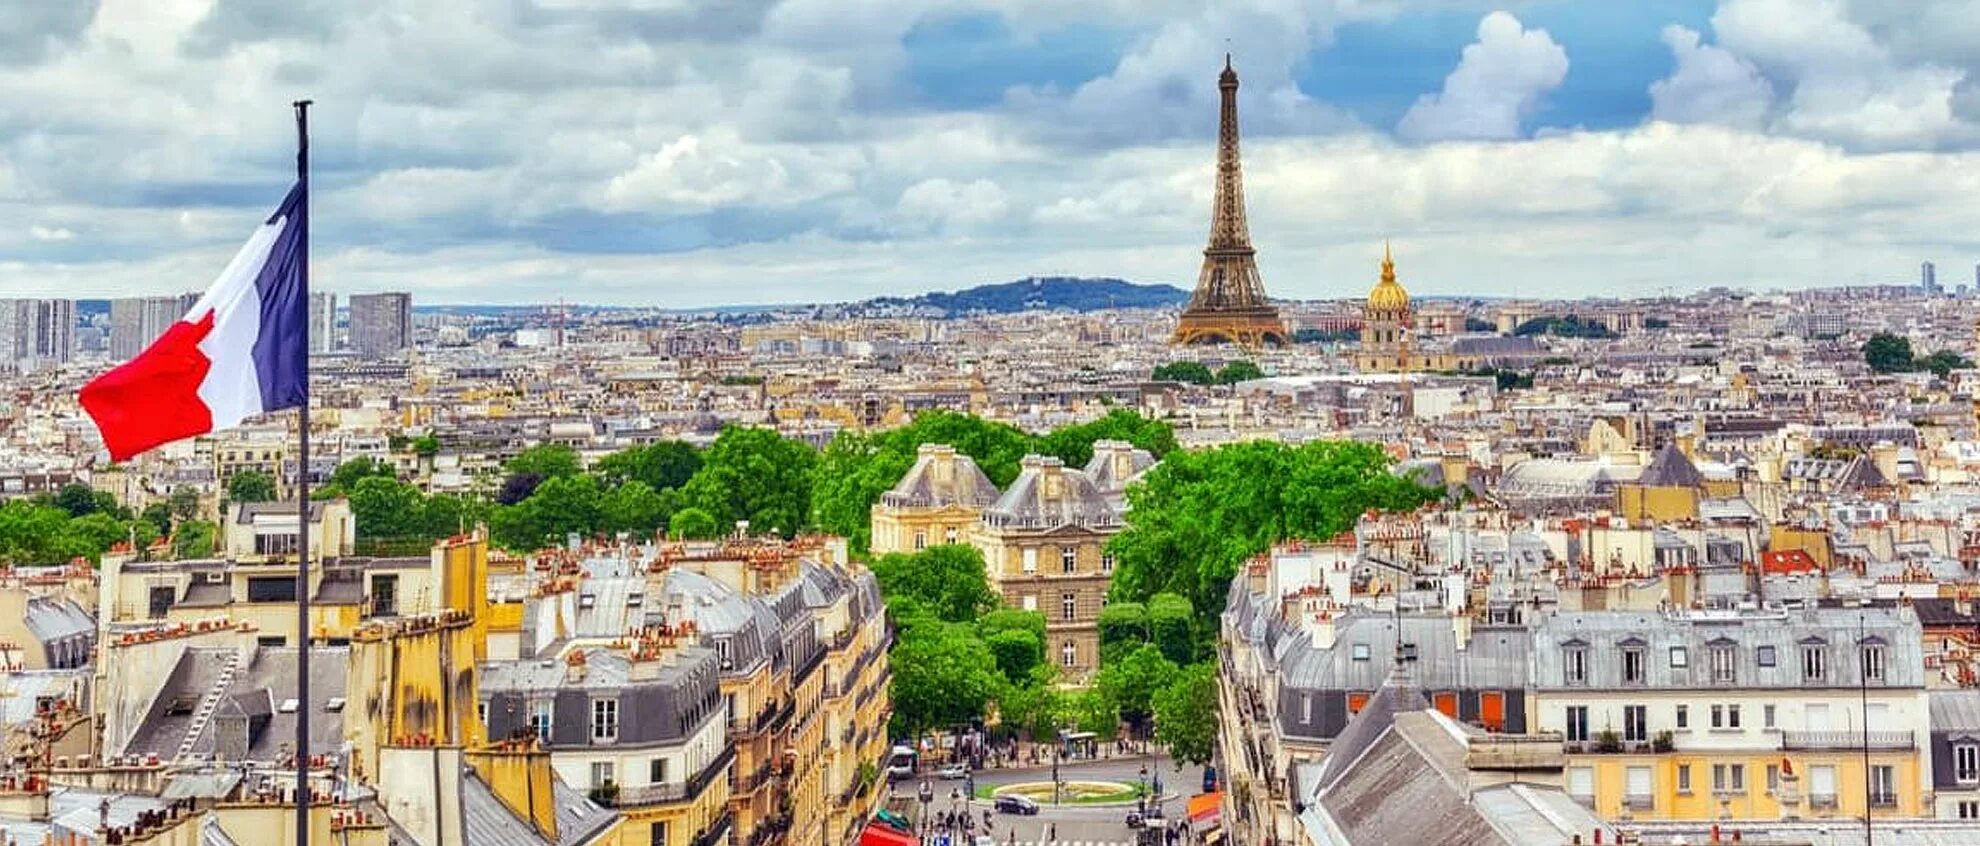 Француз ввести. Эльфиева башня с флагом Франции. Флаг Парижа. Флаг Парижа Франции. Флаг Франции фото.